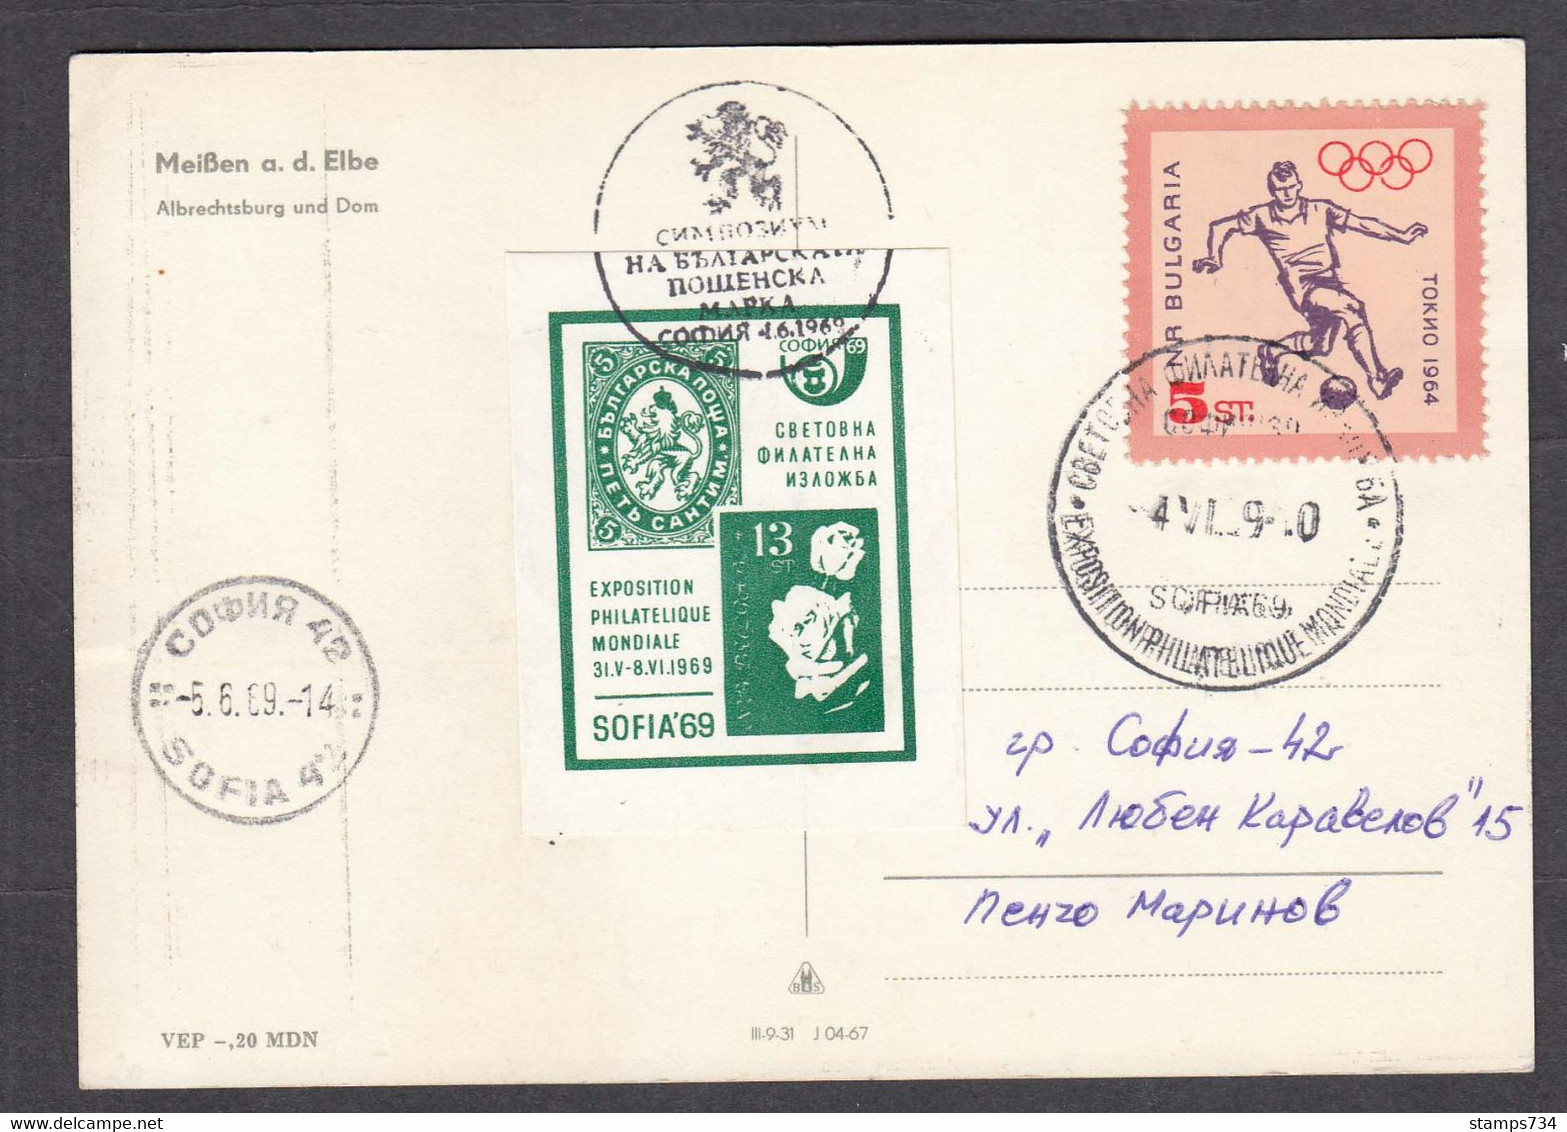 Bulgaria 20/1969, 5 St., Football, Exposition Philatelique Mondiale SOFIA'69, Post Card - Covers & Documents